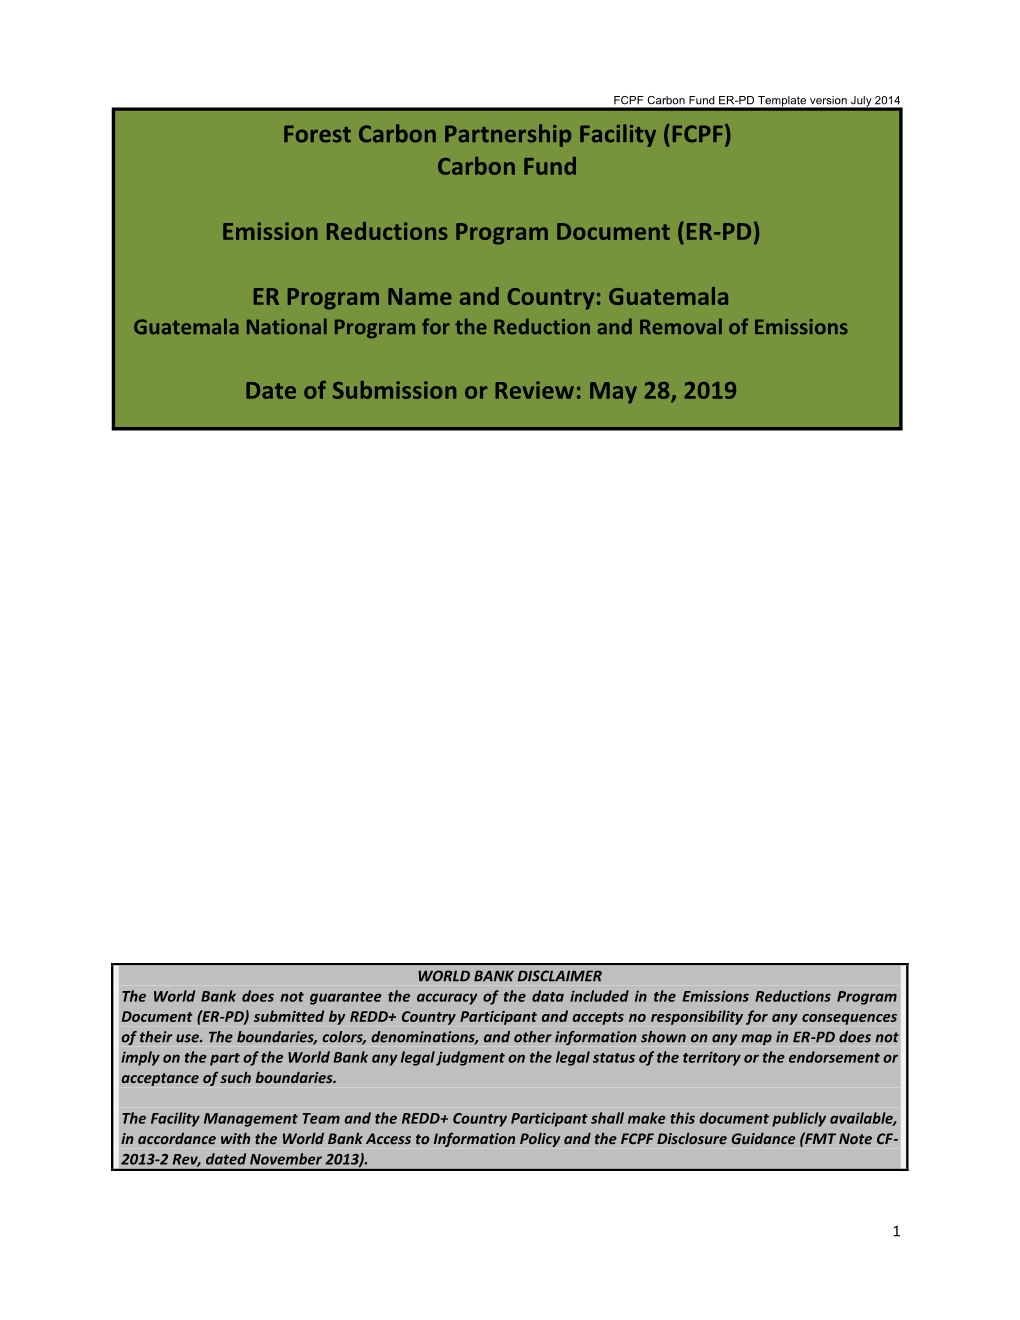 Carbon Fund Emission Reductions Program Document (ER-PD)